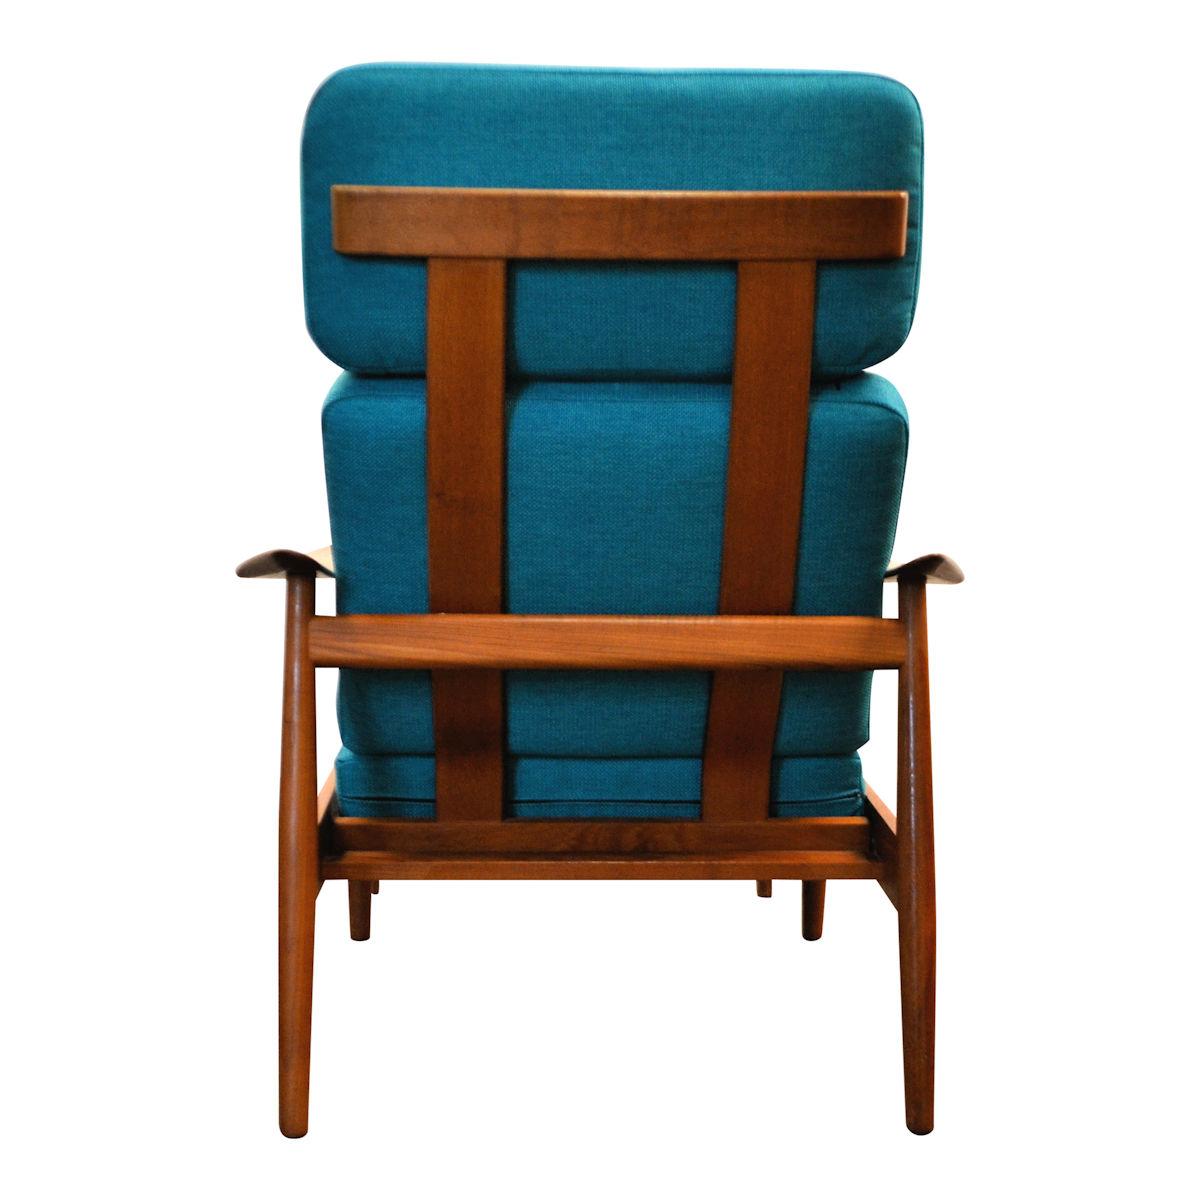 Vintage Arne Vodder Fd-164 Teak Lounge Chair and Ottoman For Sale 3